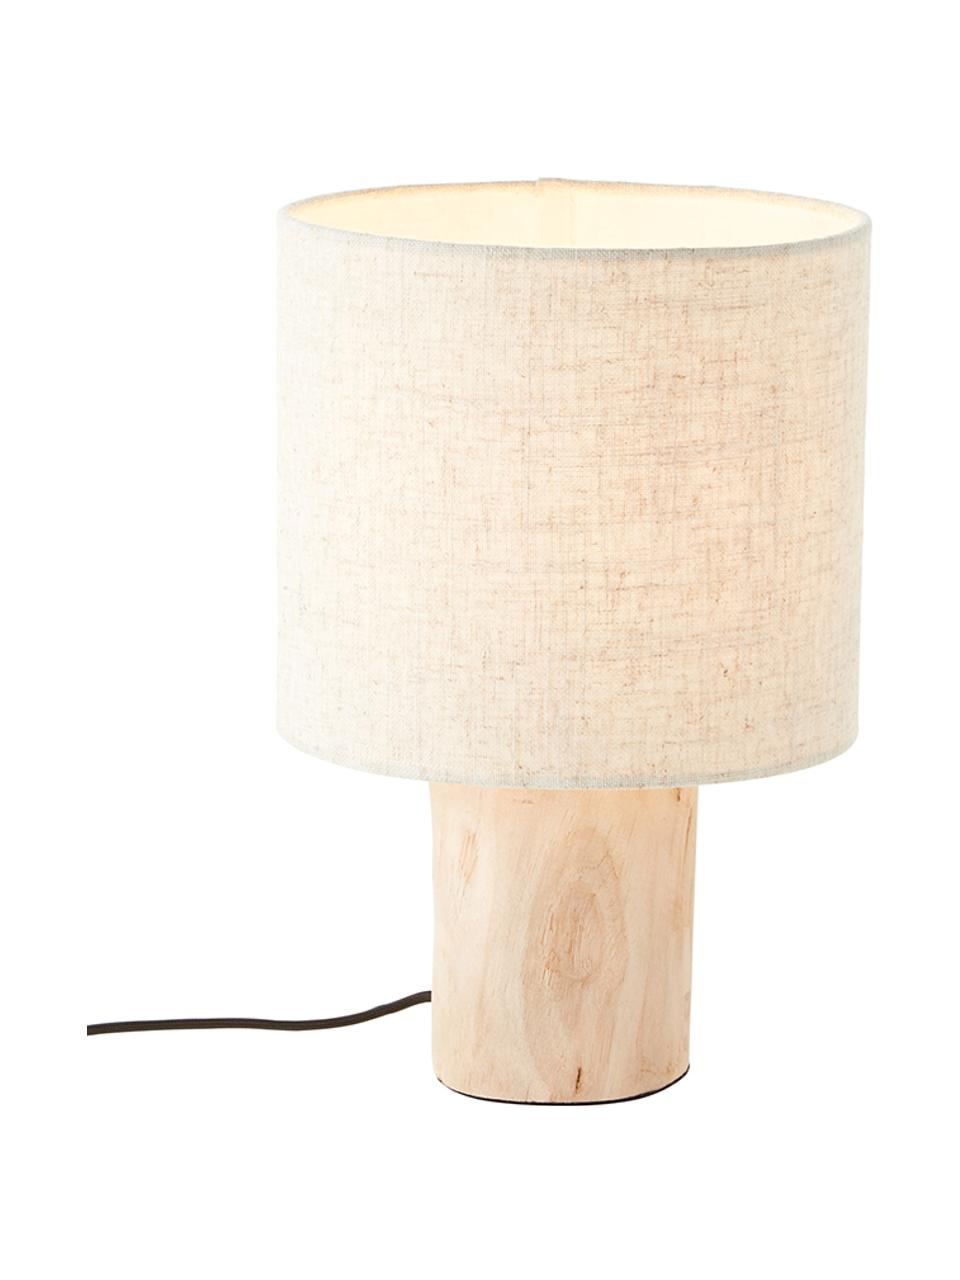 Kleine Scandi tafellamp Pia van hout en linnen, Lampenkap: linnen, Lampvoet: hout, FSC-certificaat, Beige, helder hout, Ø 20 x H 30 cm